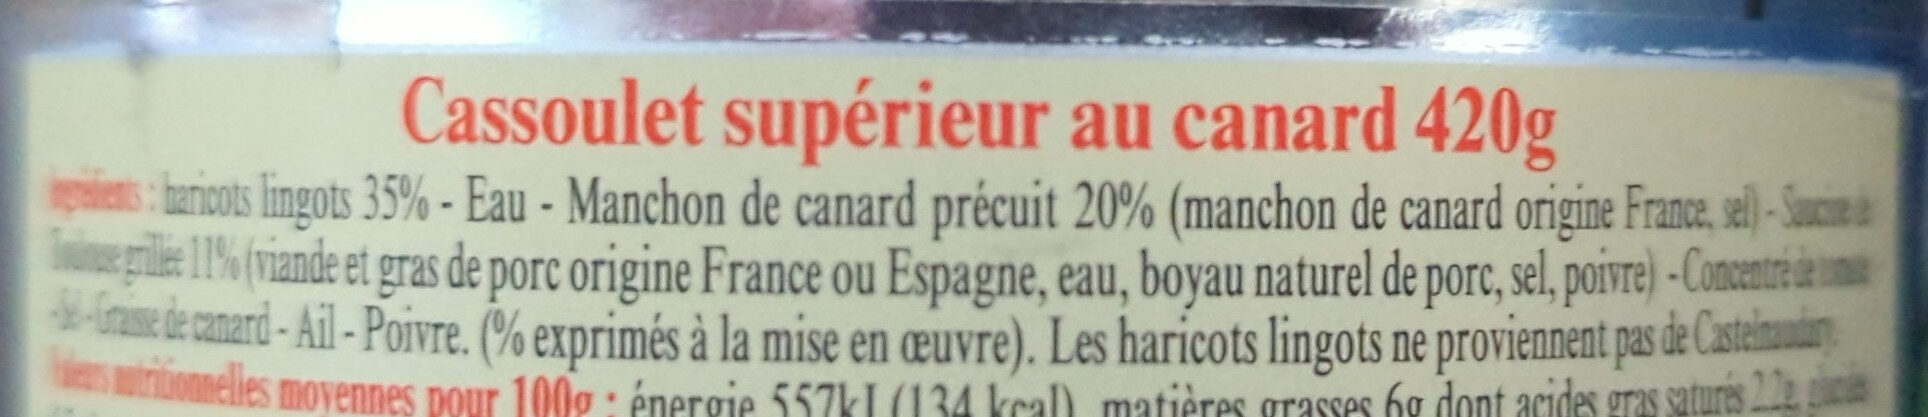 Cassoulet au Canard - Ingredients - fr